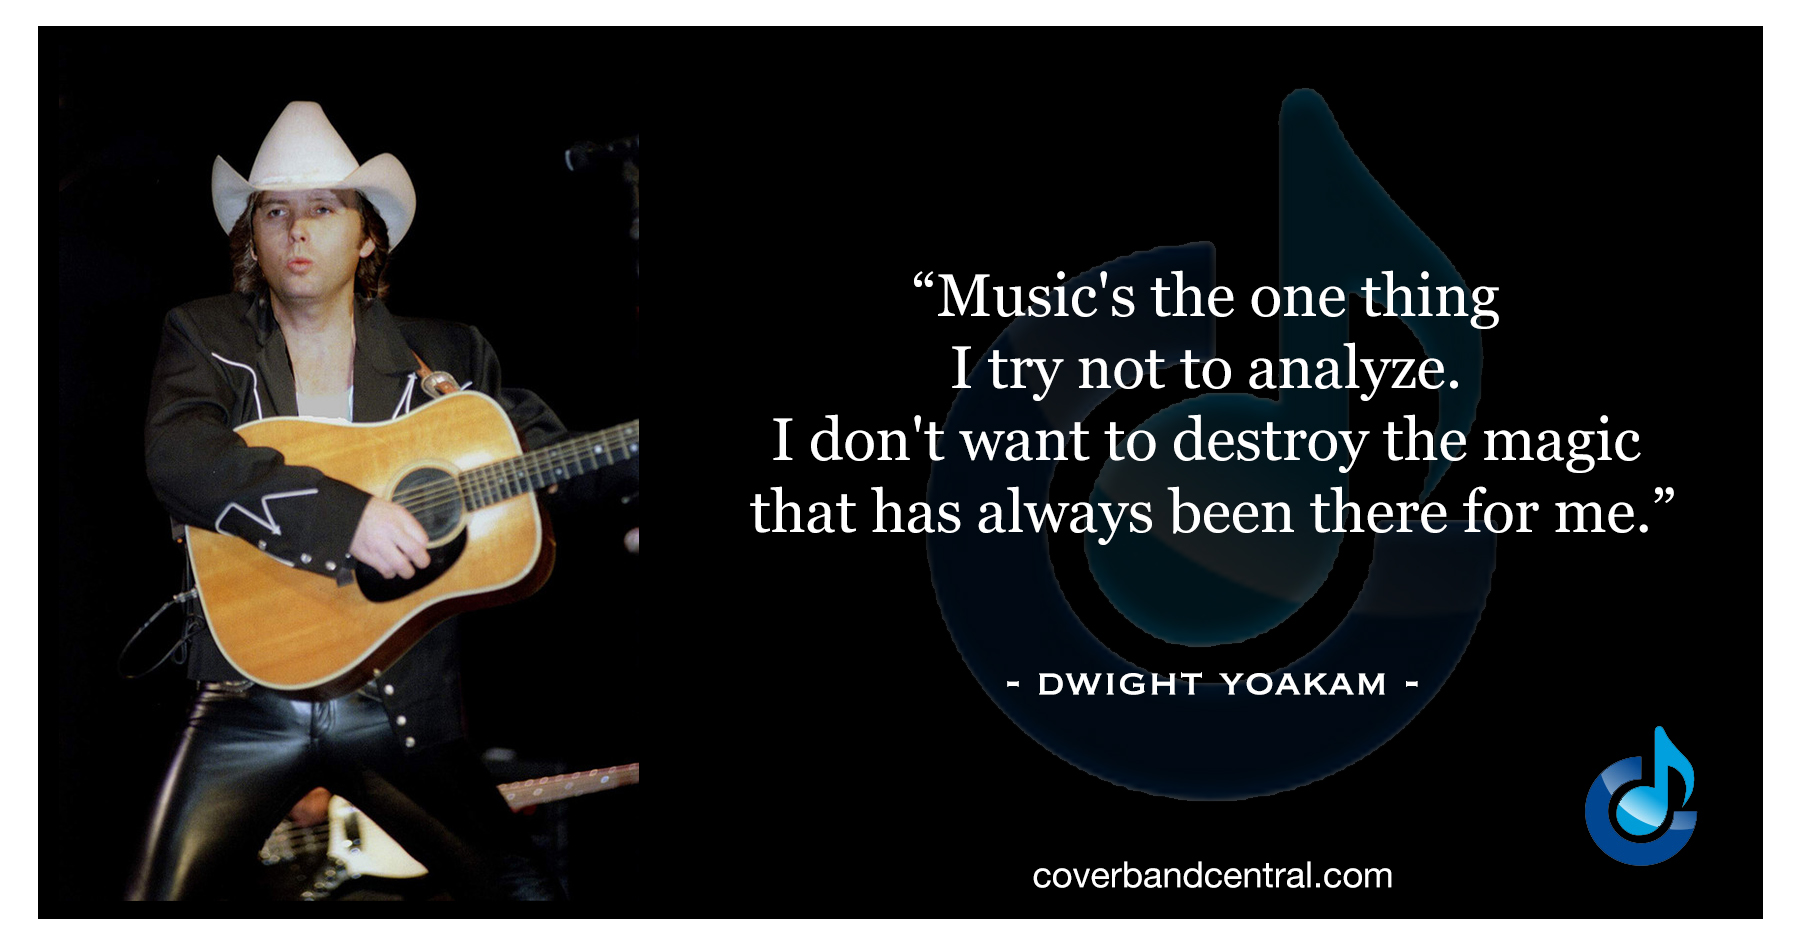 Dwight Yoakam quote